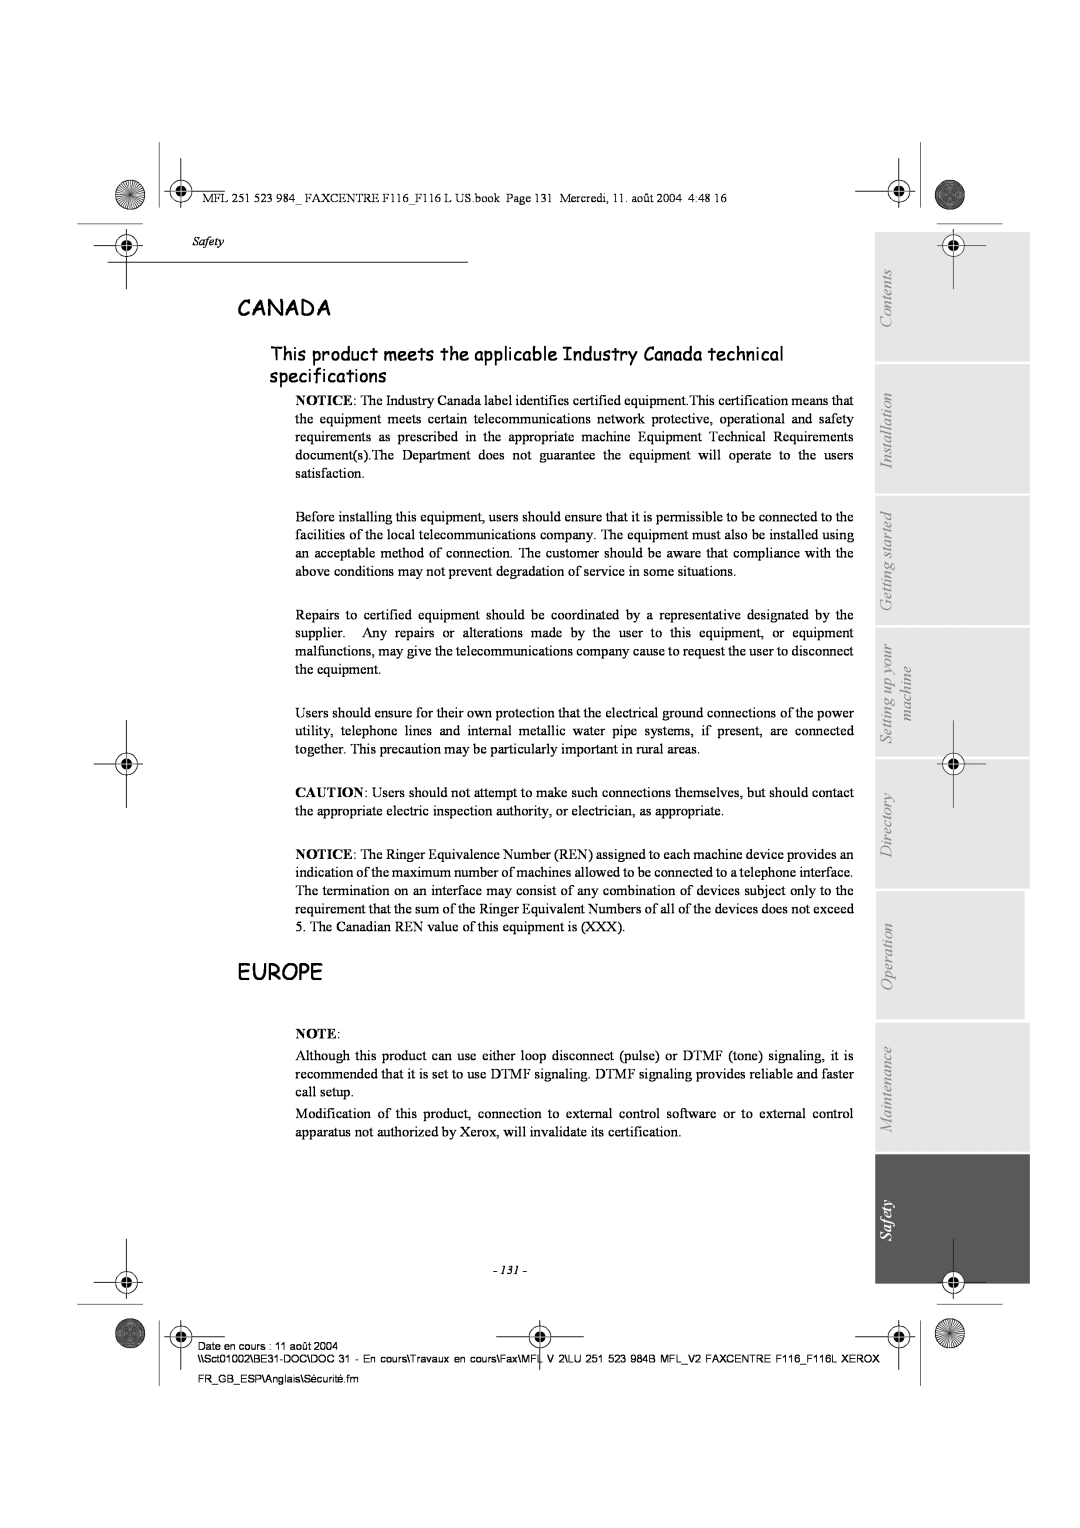 Xerox F116 user manual Canada, Europe, Maintenance, Safety 